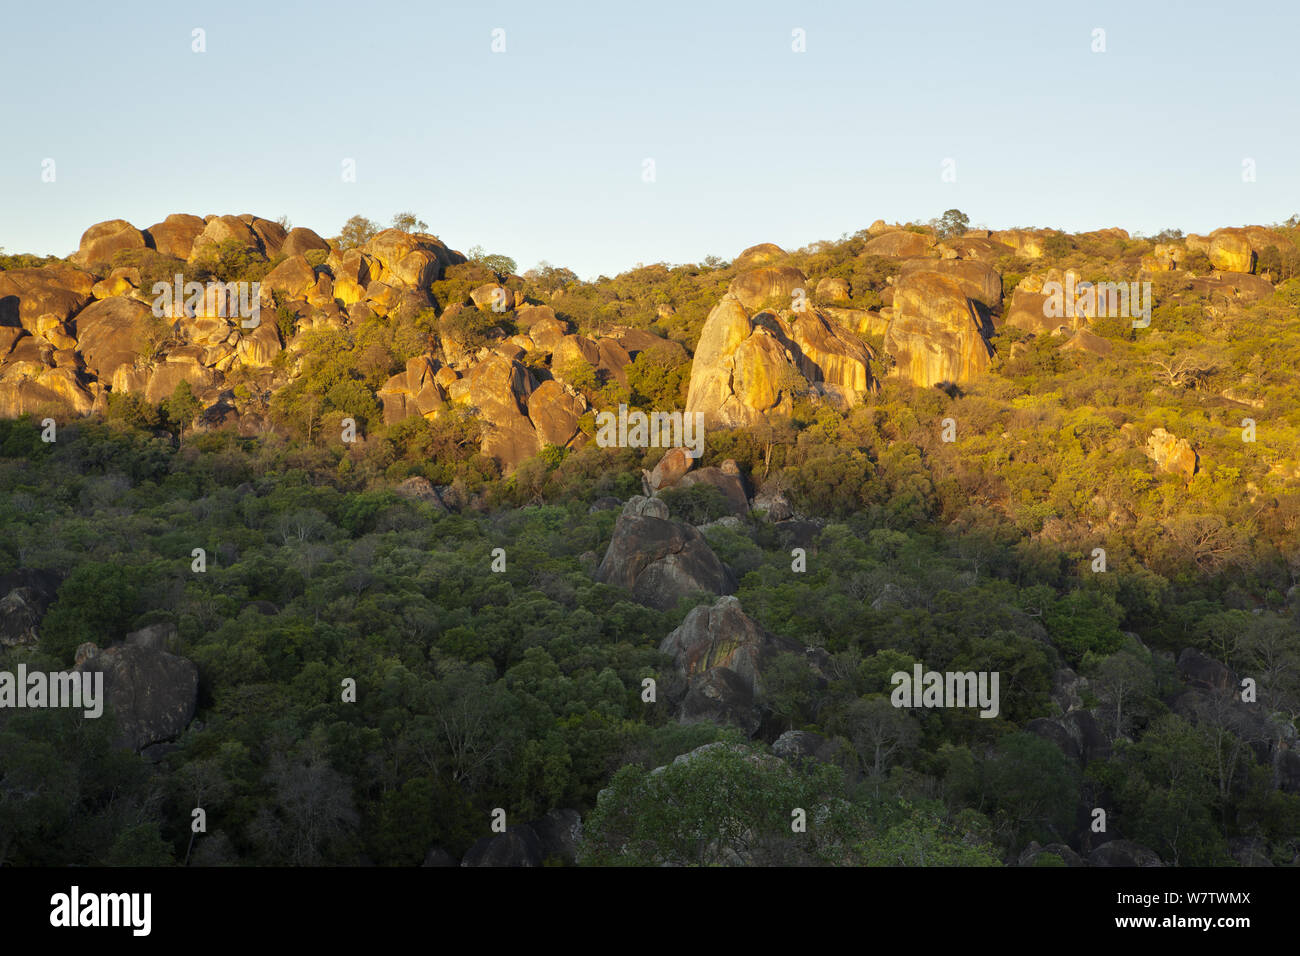 Granite outcrops on hillside, Matobo National Park, Motopos Hills, Zimbabwe, November 2011. Stock Photo